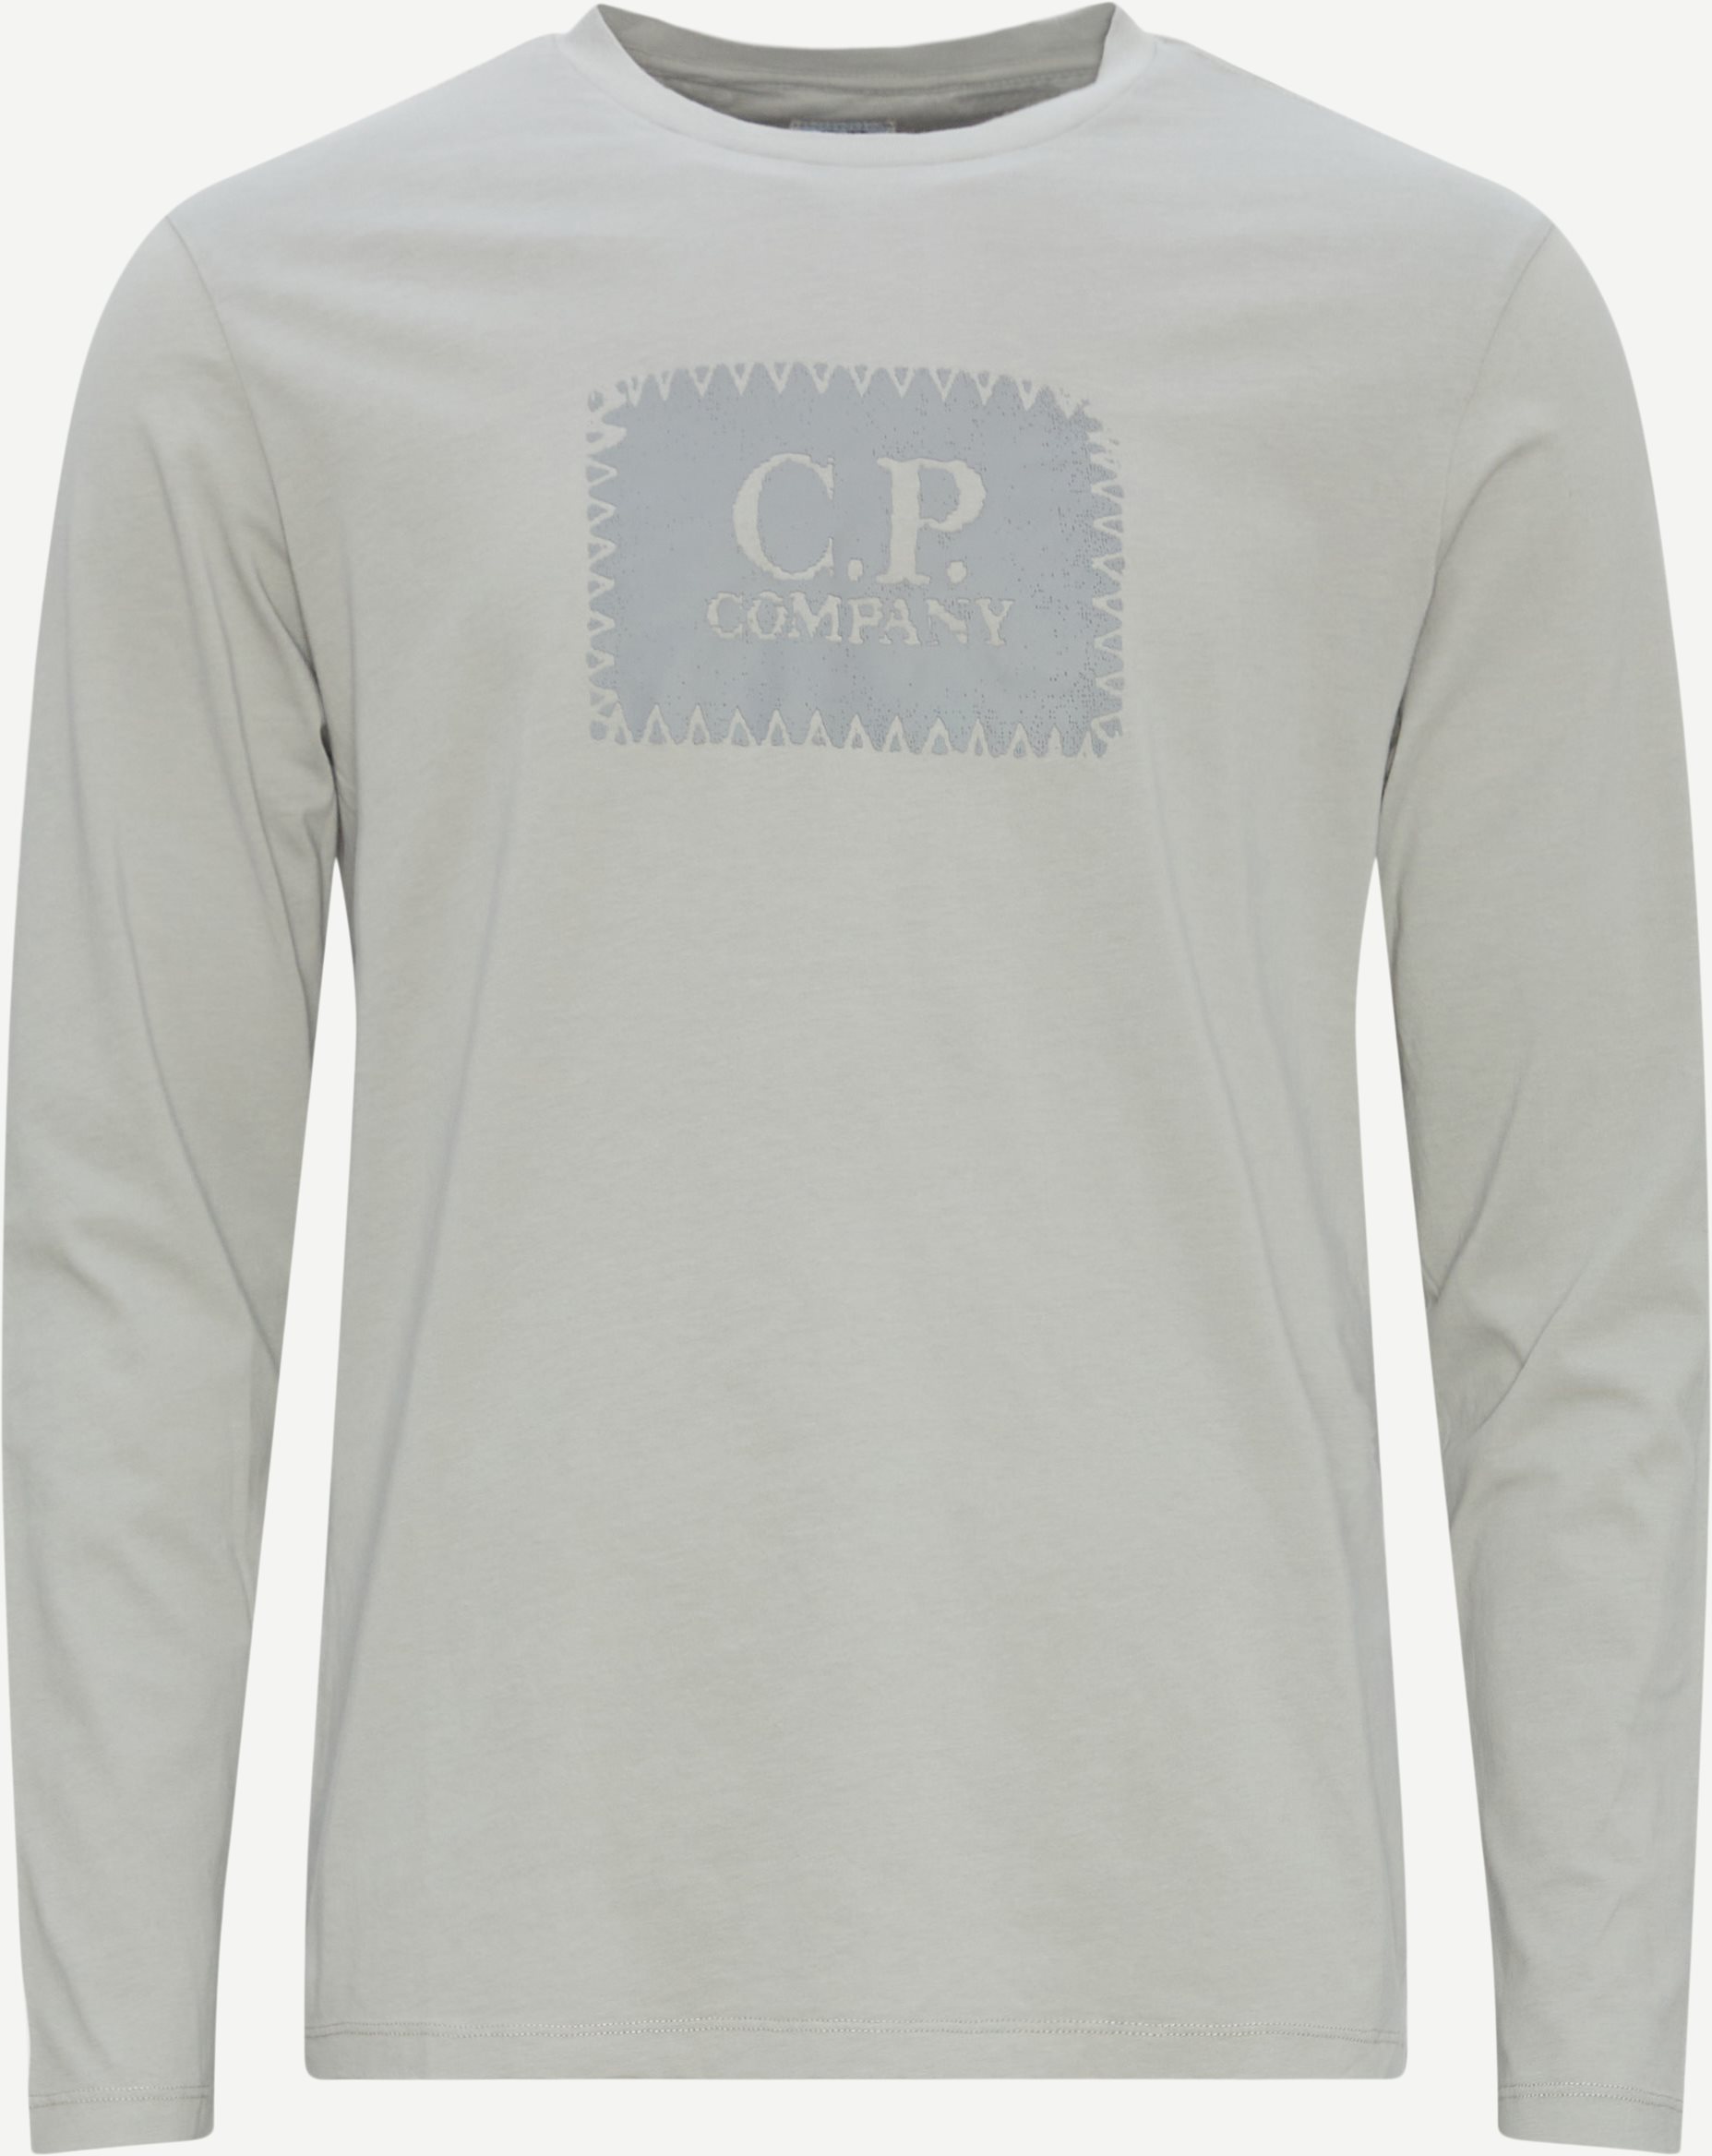 C.P. Company T-shirts TS265A 005100W Grey